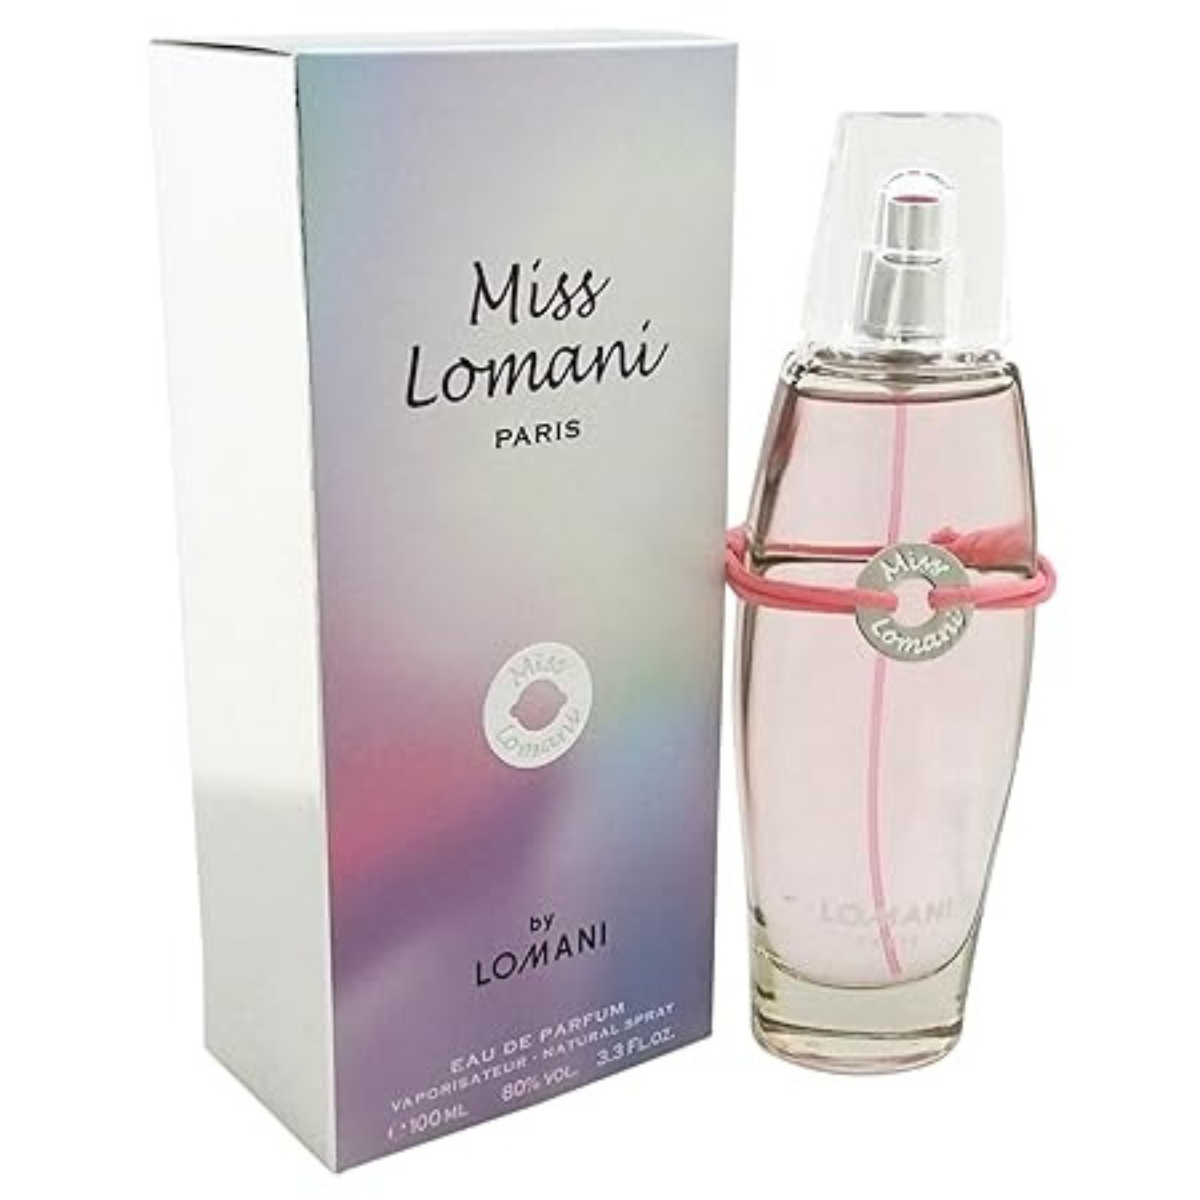 Lomani Miss Lomani 100ml for women EDP Perfume